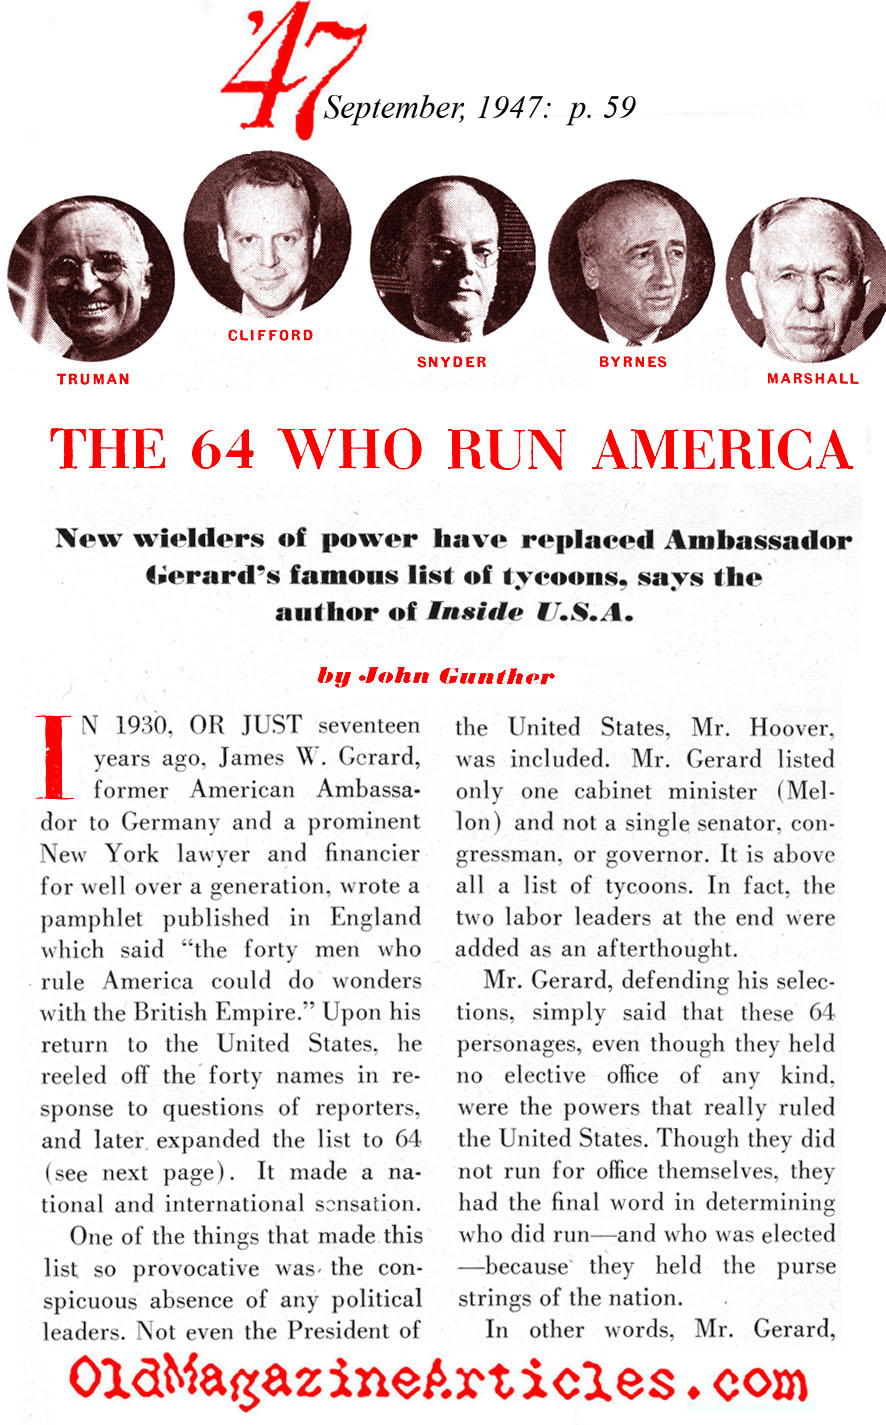 The Most Powerfull Men in Cold War Washington ('47 Magazine)